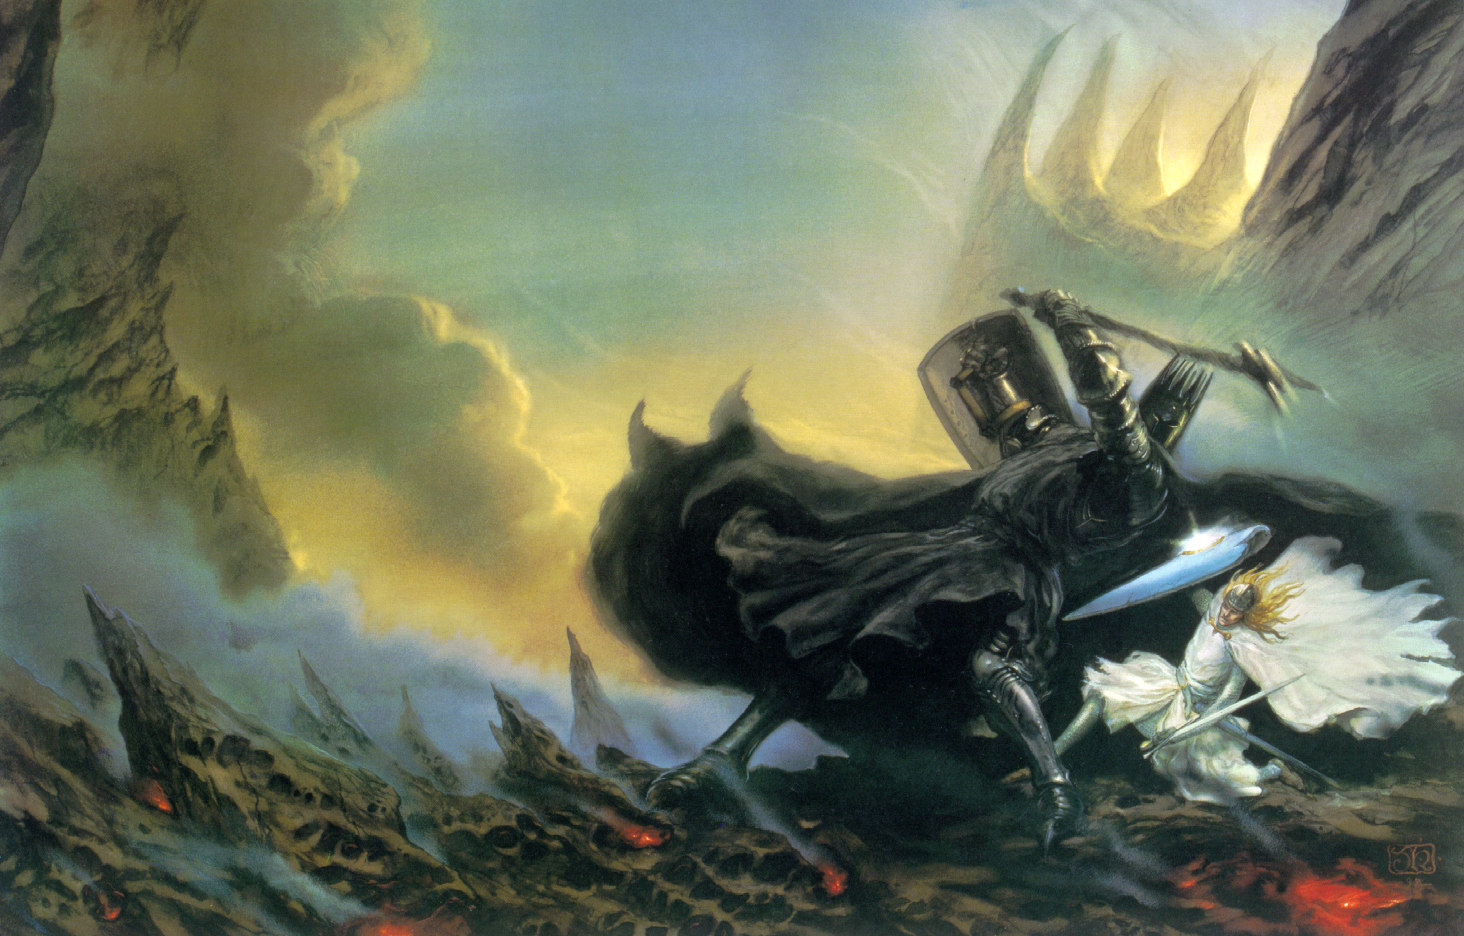 John Howe | Le Silmarillion | Fingolfin's Challenge